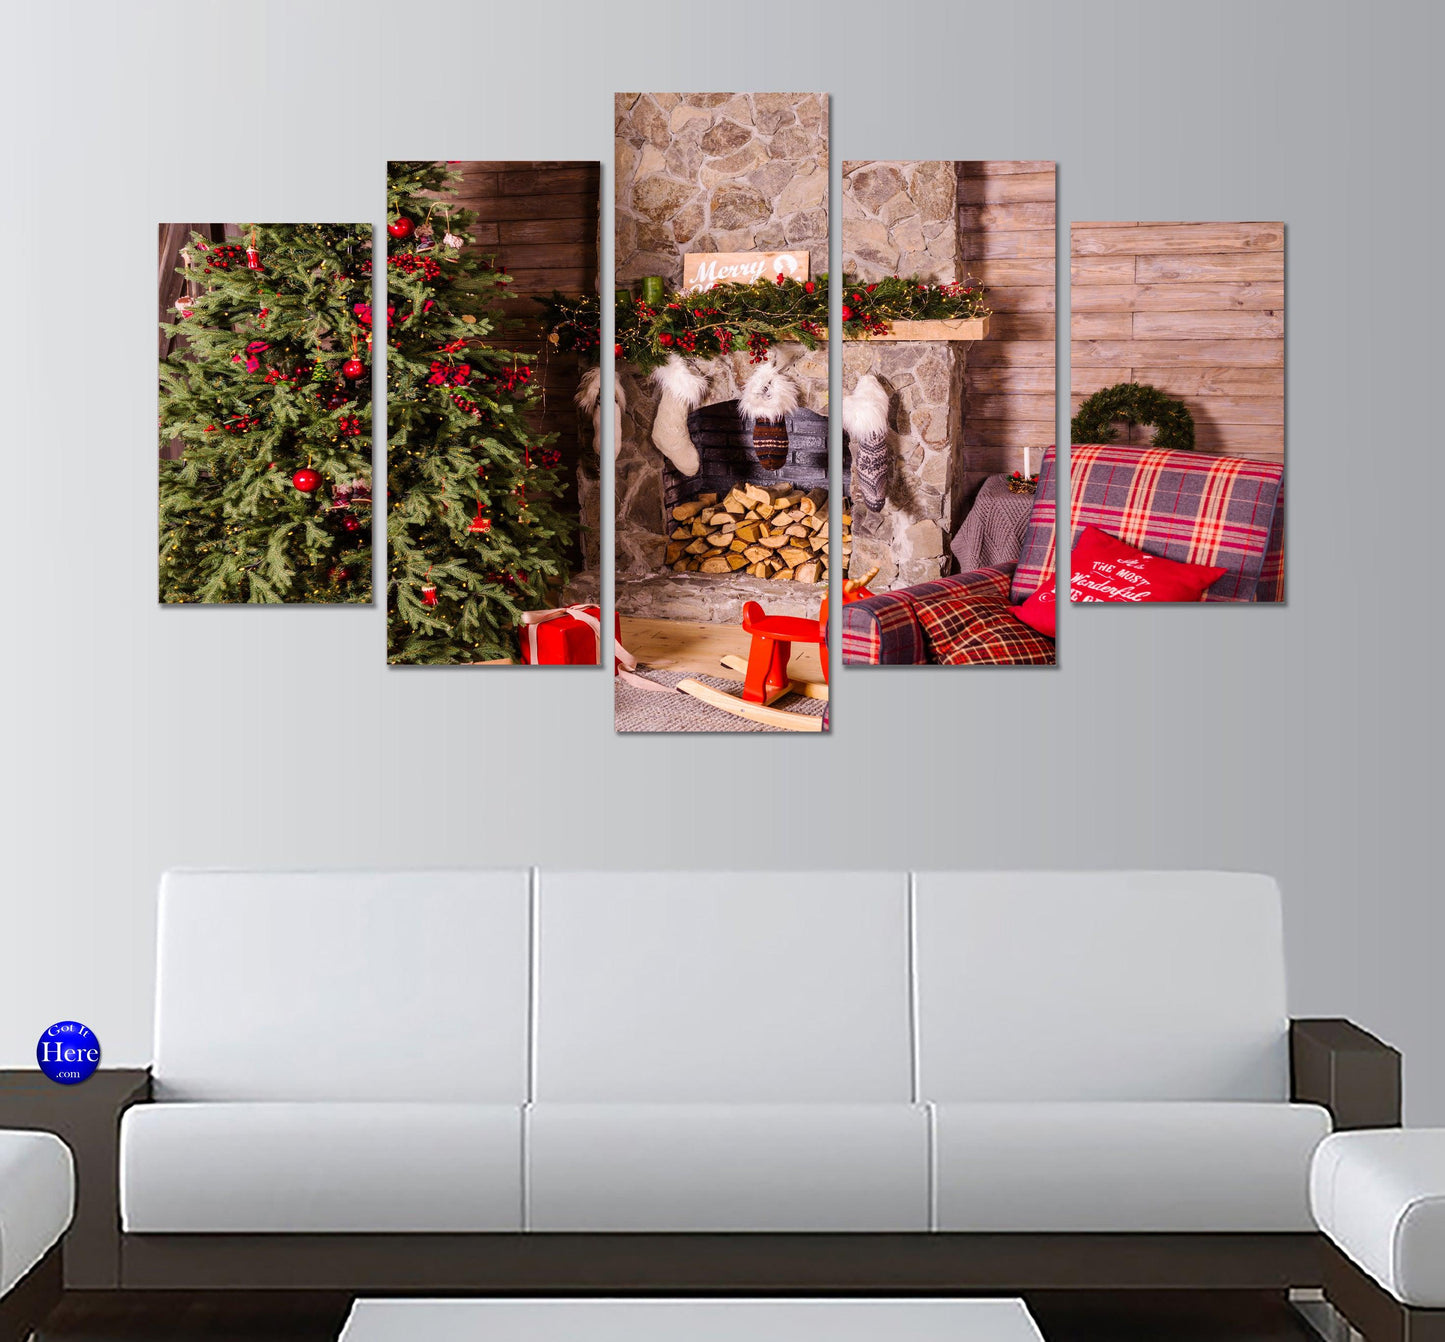 Presents Under Christmas Tree Near Fireplace 5 Panel Canvas Print Wall Art - GotItHere.com